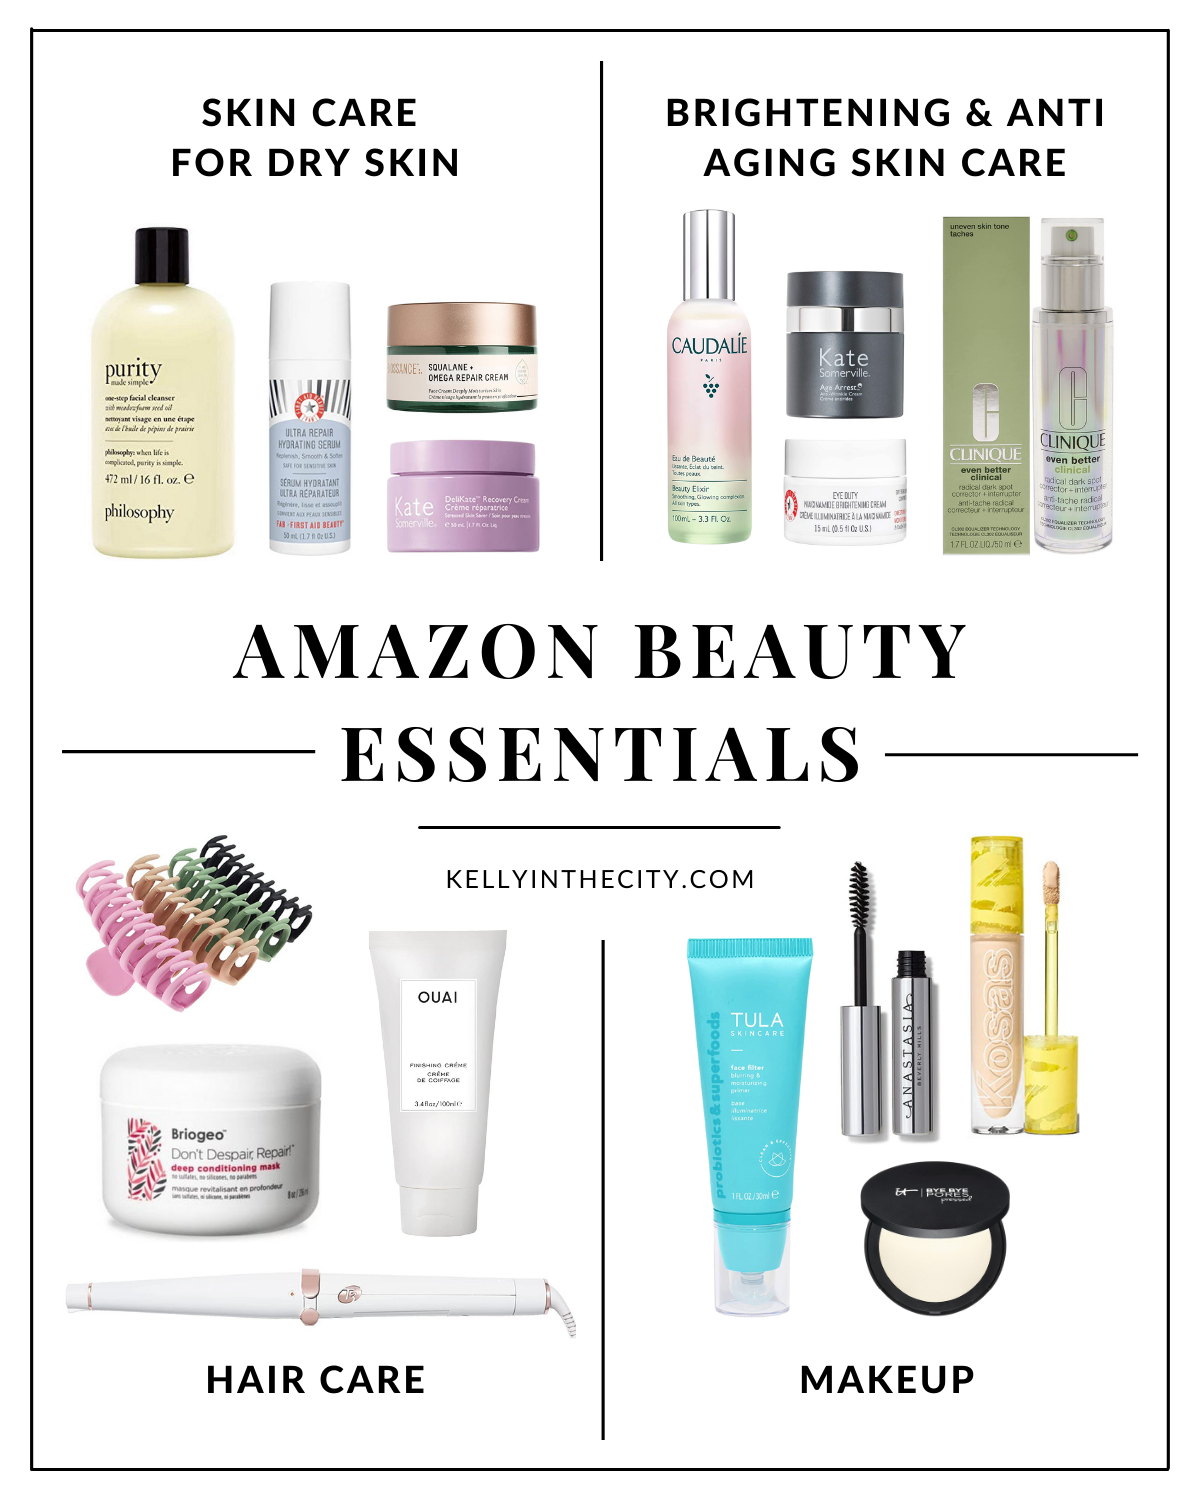 Amazon Beauty Essentials 8/9